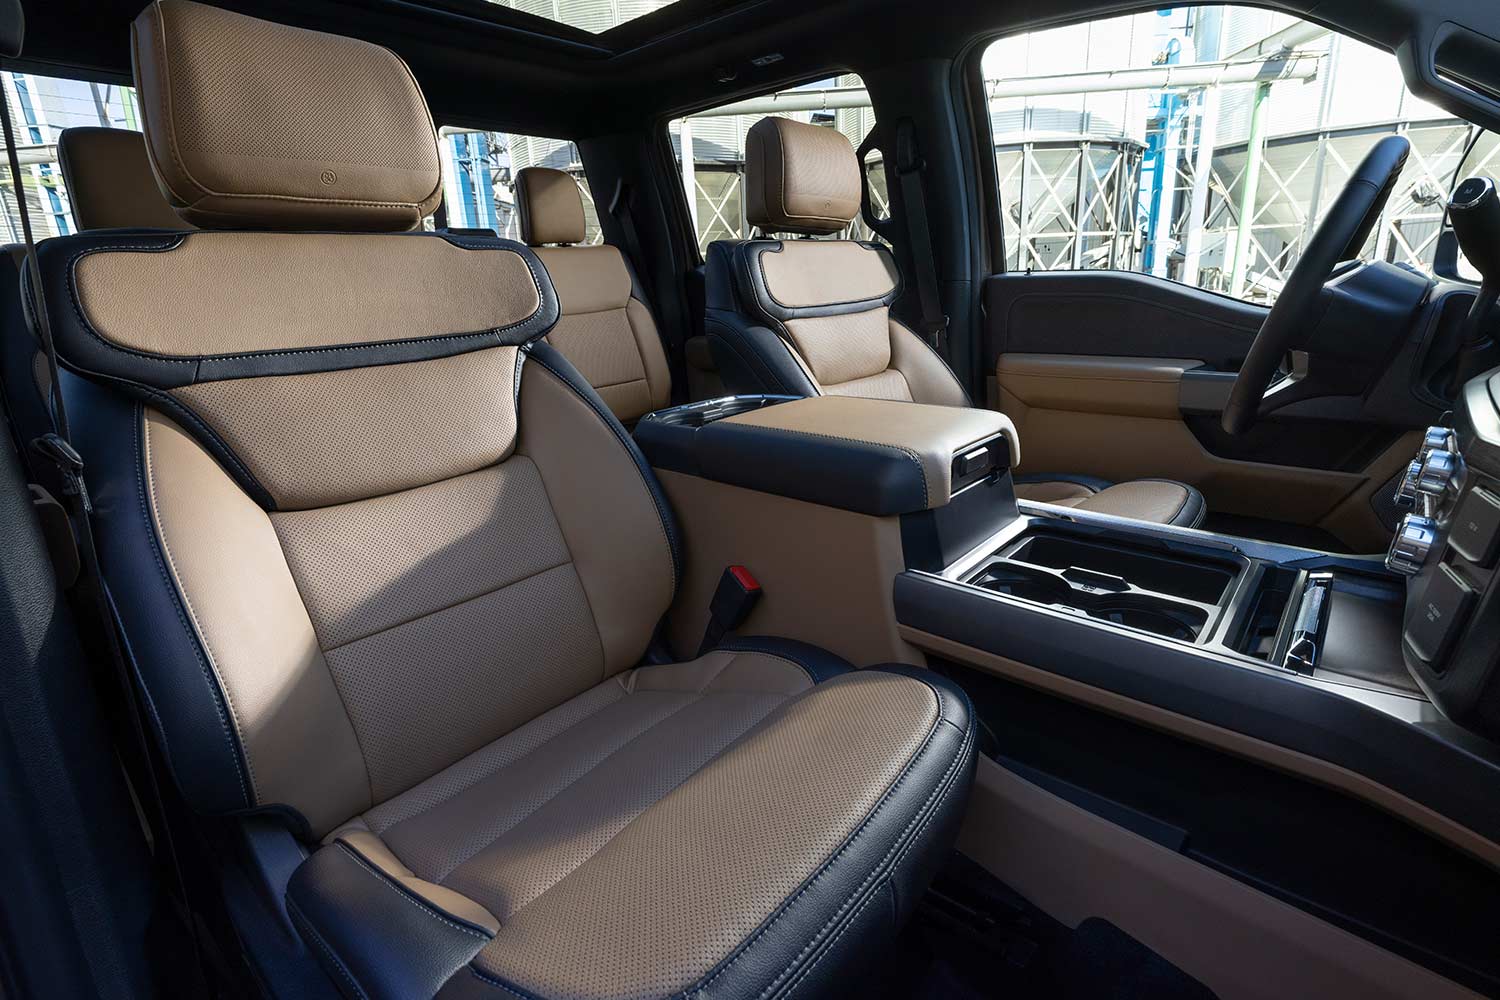 Ford F 350 interior - Seats